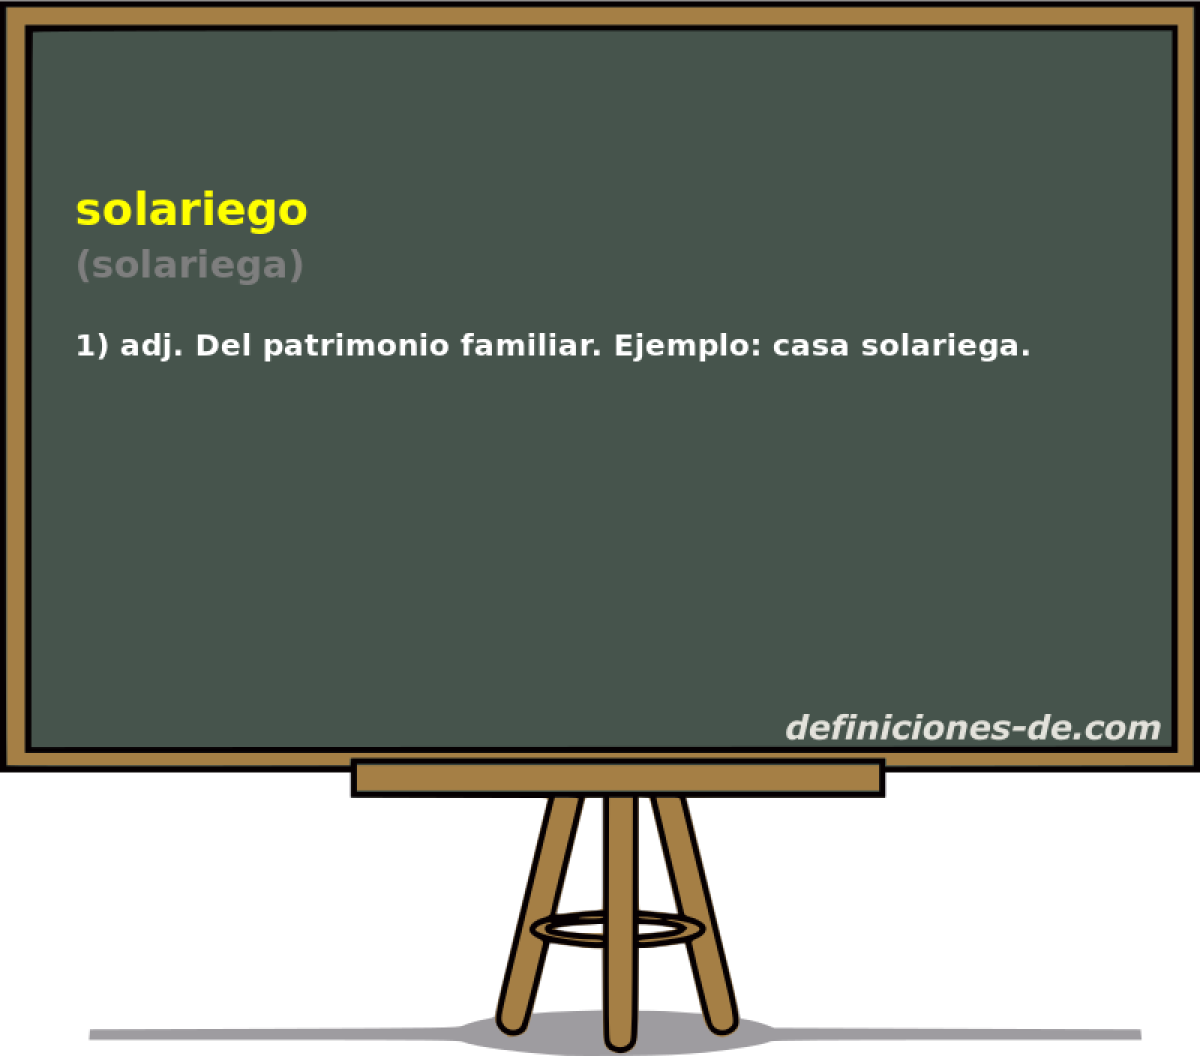 solariego (solariega)